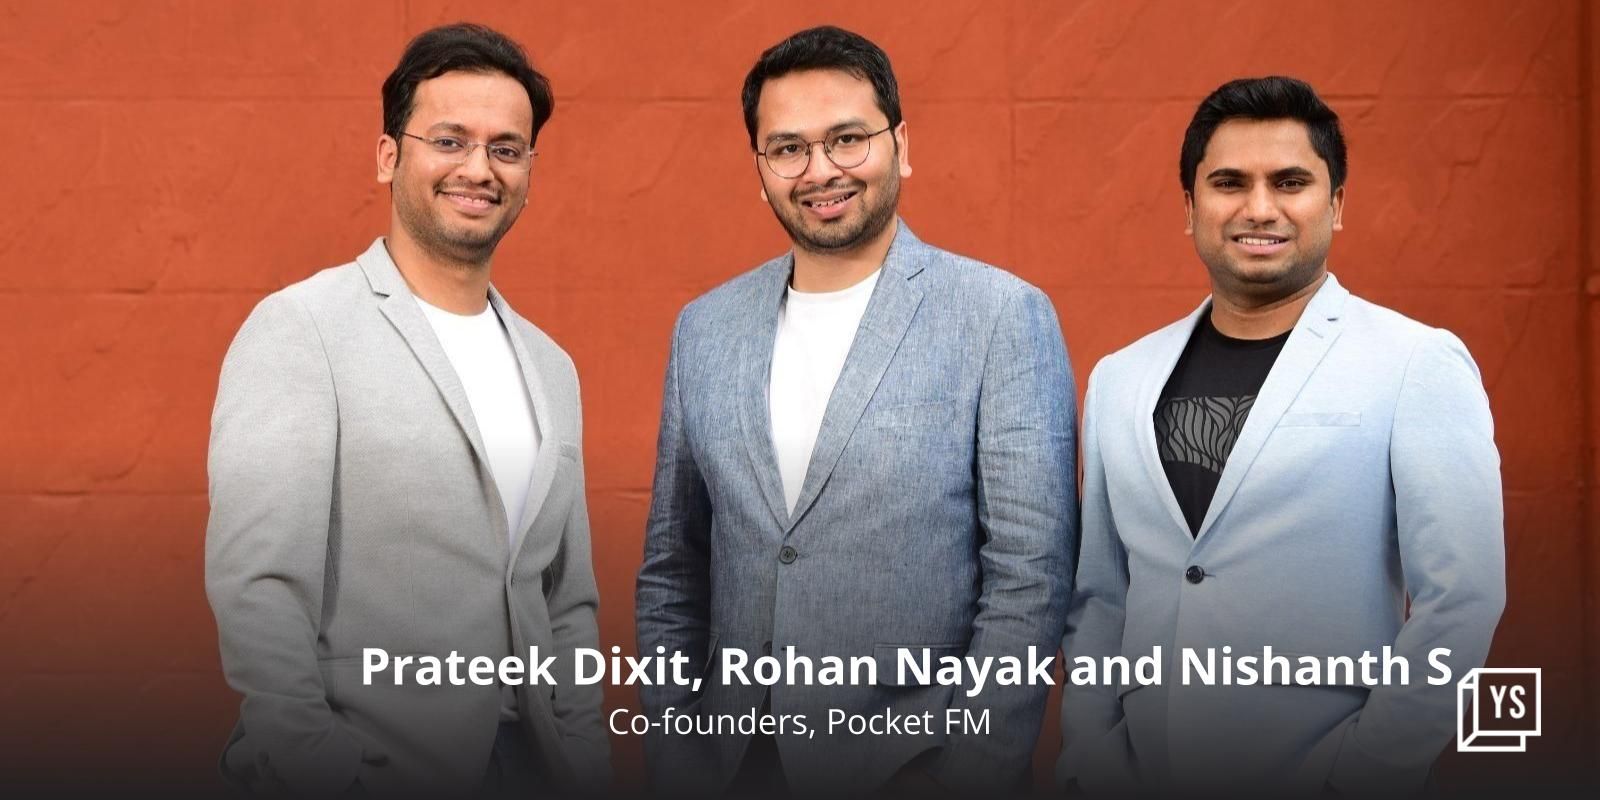 Pocket FM names Umesh Bude as SVP of engineering, Rohan Gandhi as VP of analytics